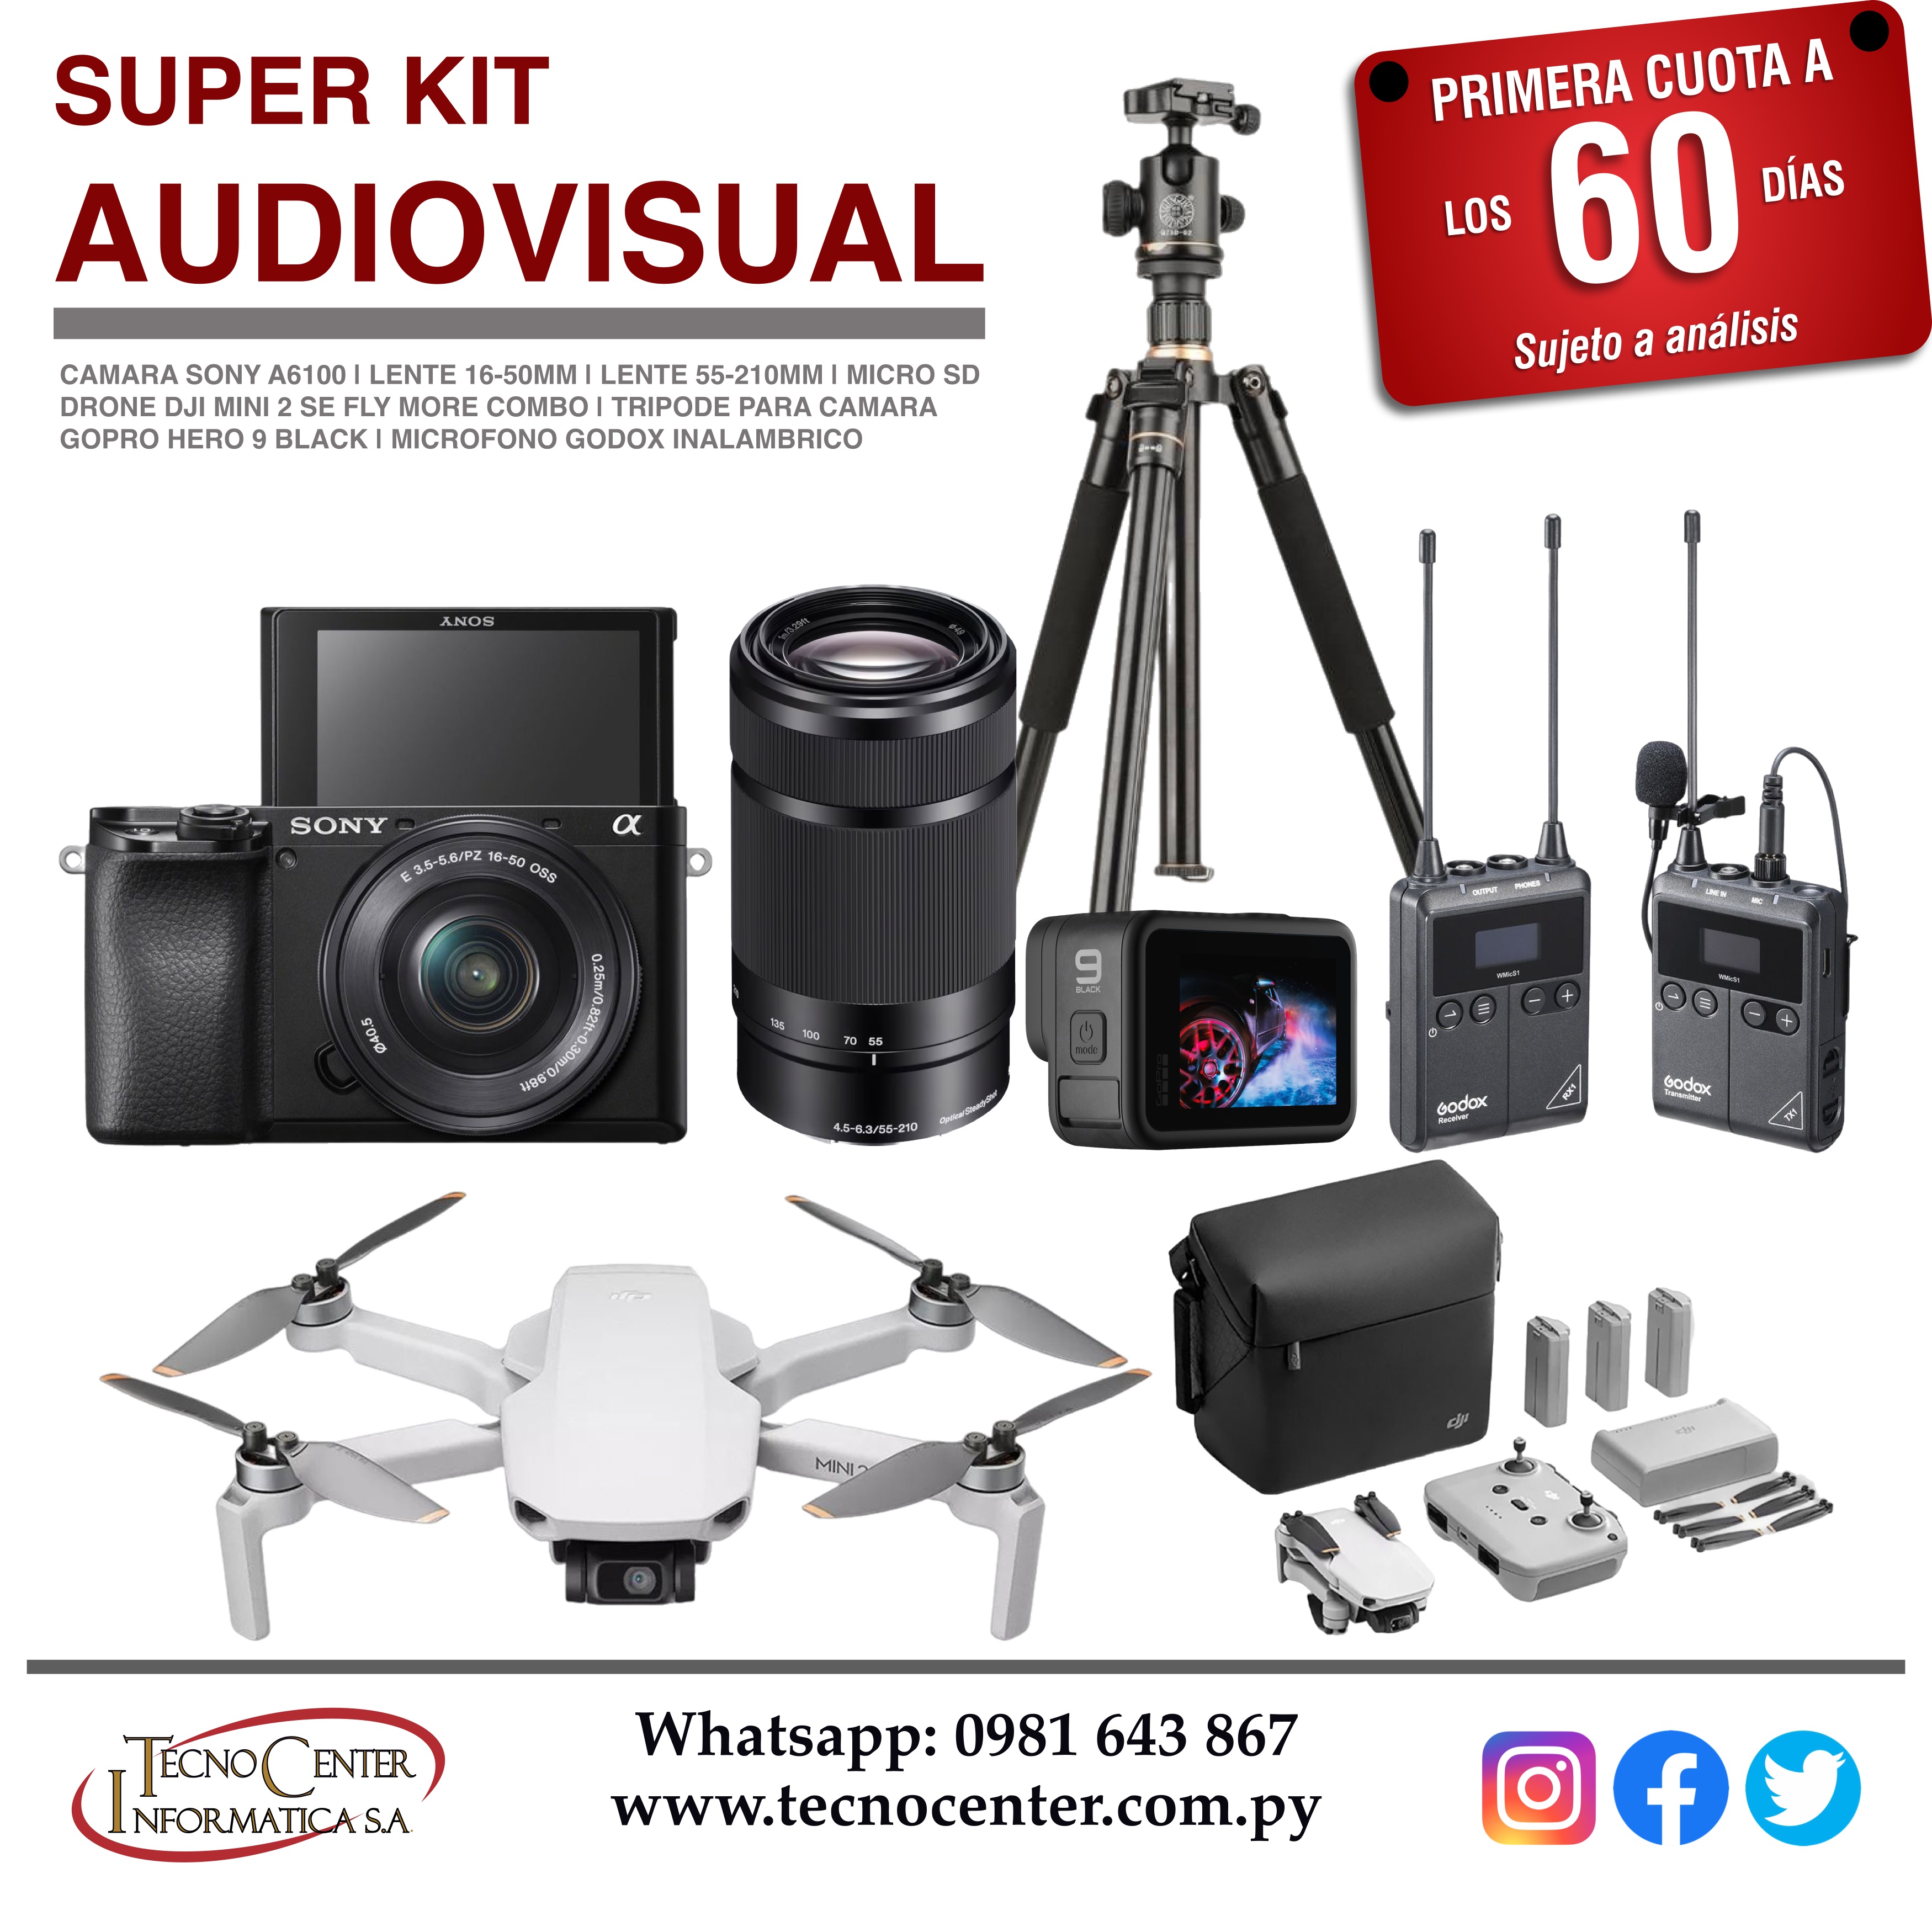 Super Kit Audiovisual